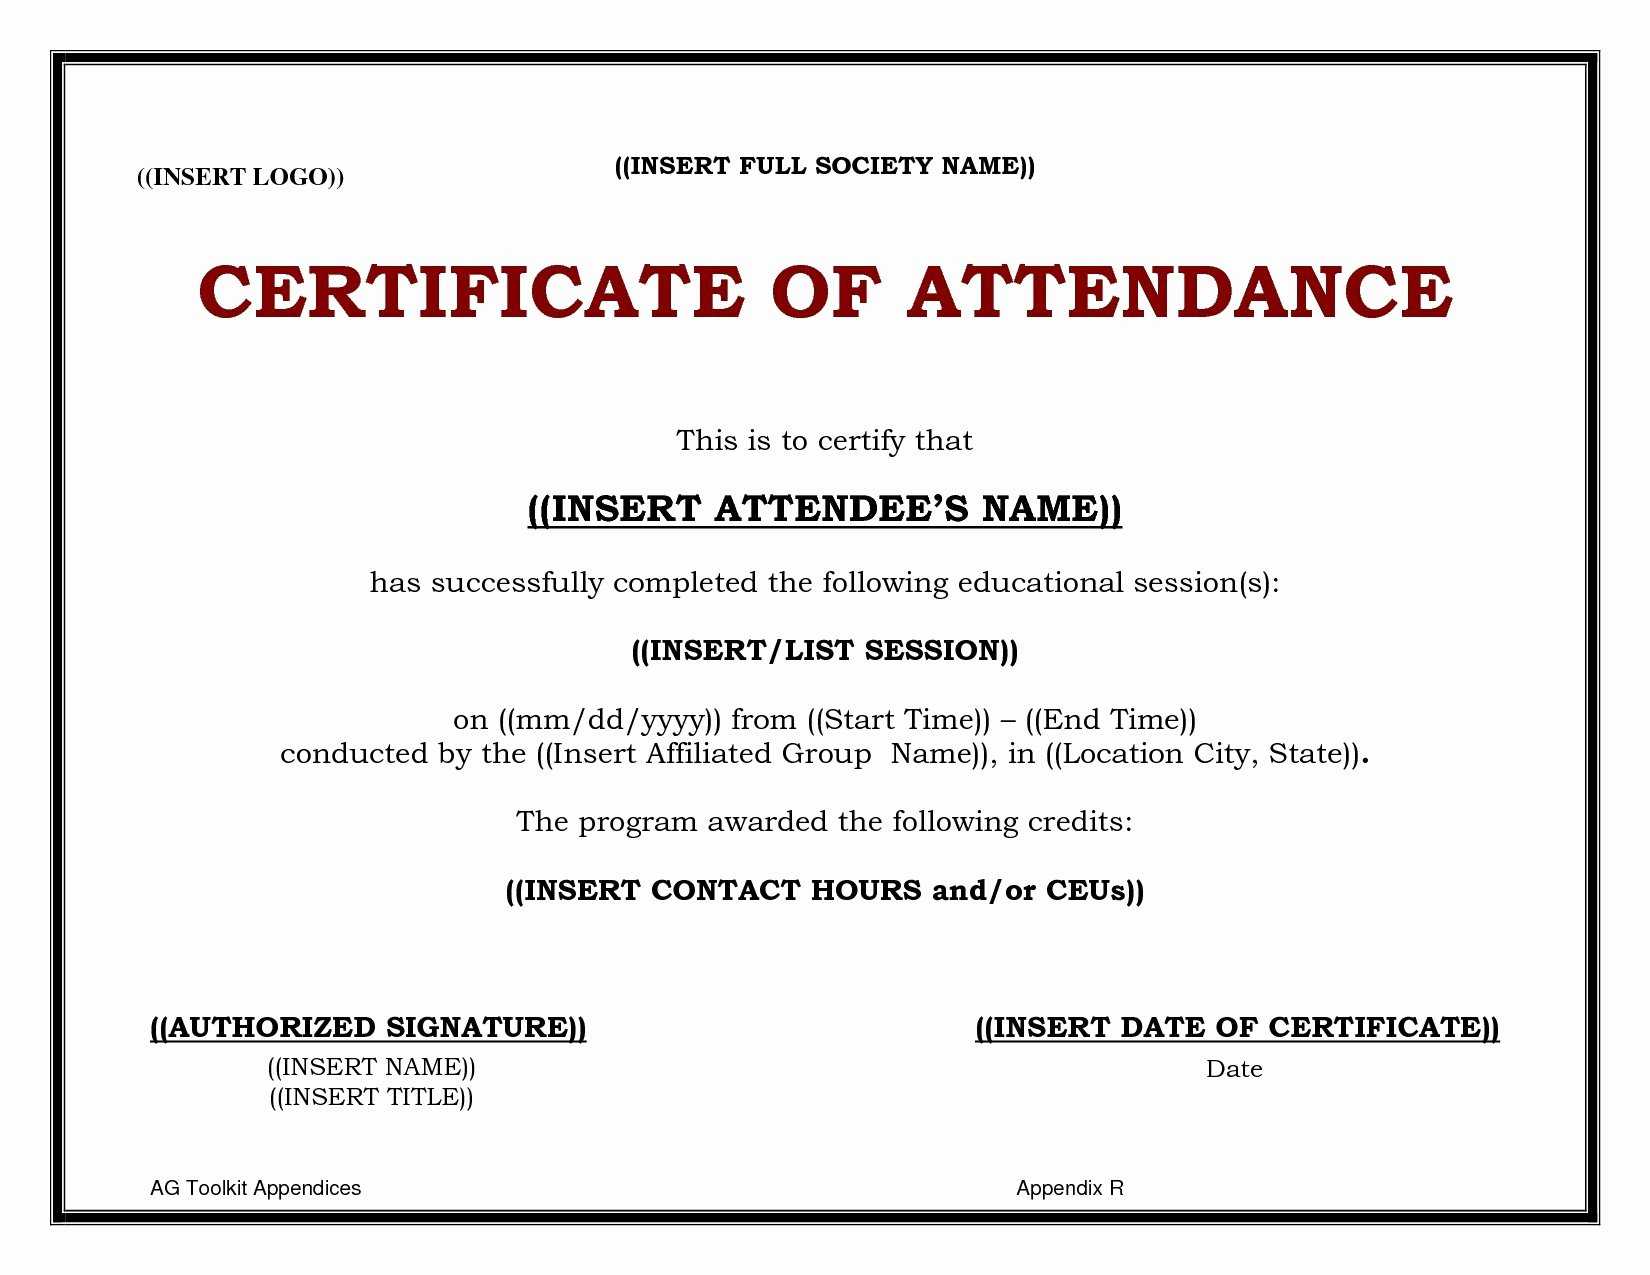 30 Ceu Certificate Of Attendance Template | Pryncepality Intended For Certificate Of Attendance Conference Template